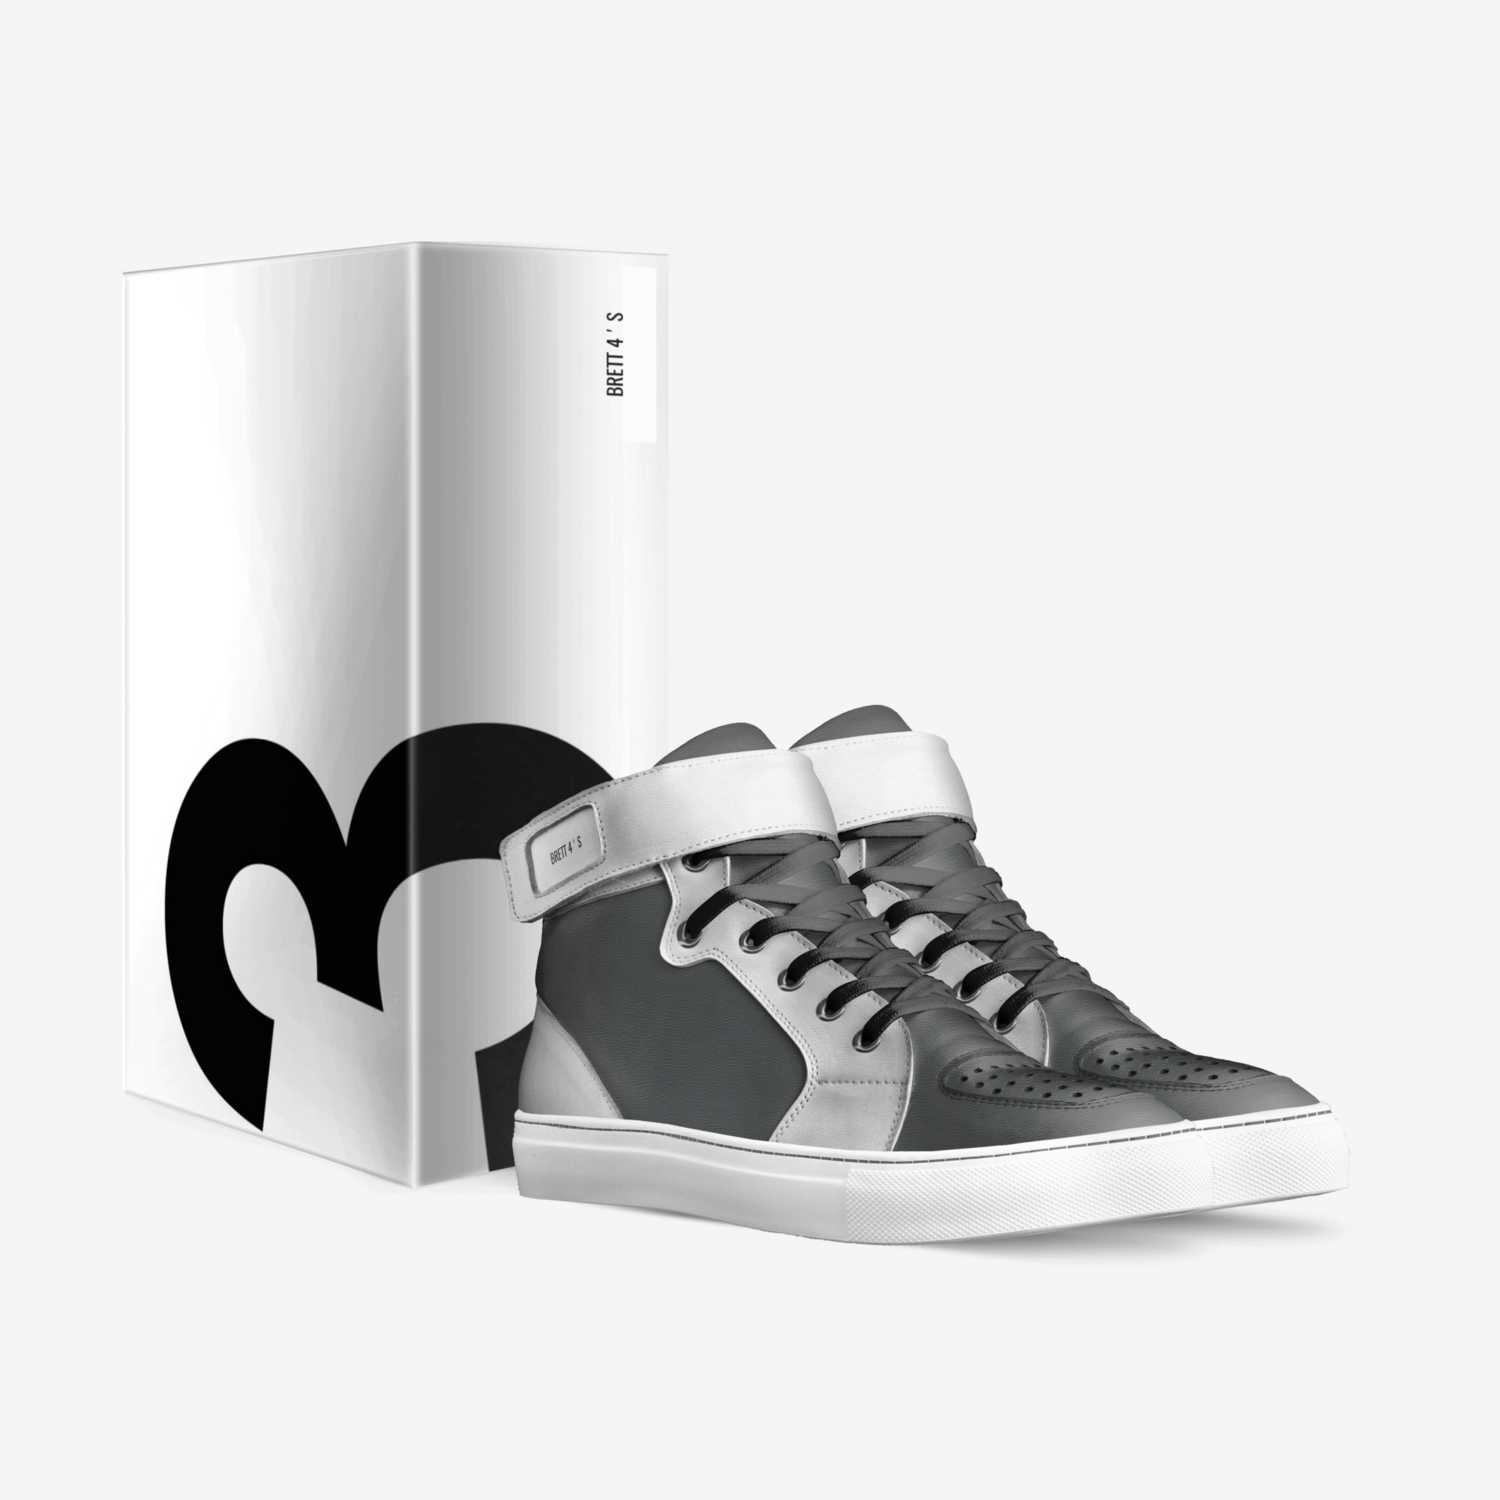 Brett 4 ' S custom made in Italy shoes by Brett Staloch | Box view